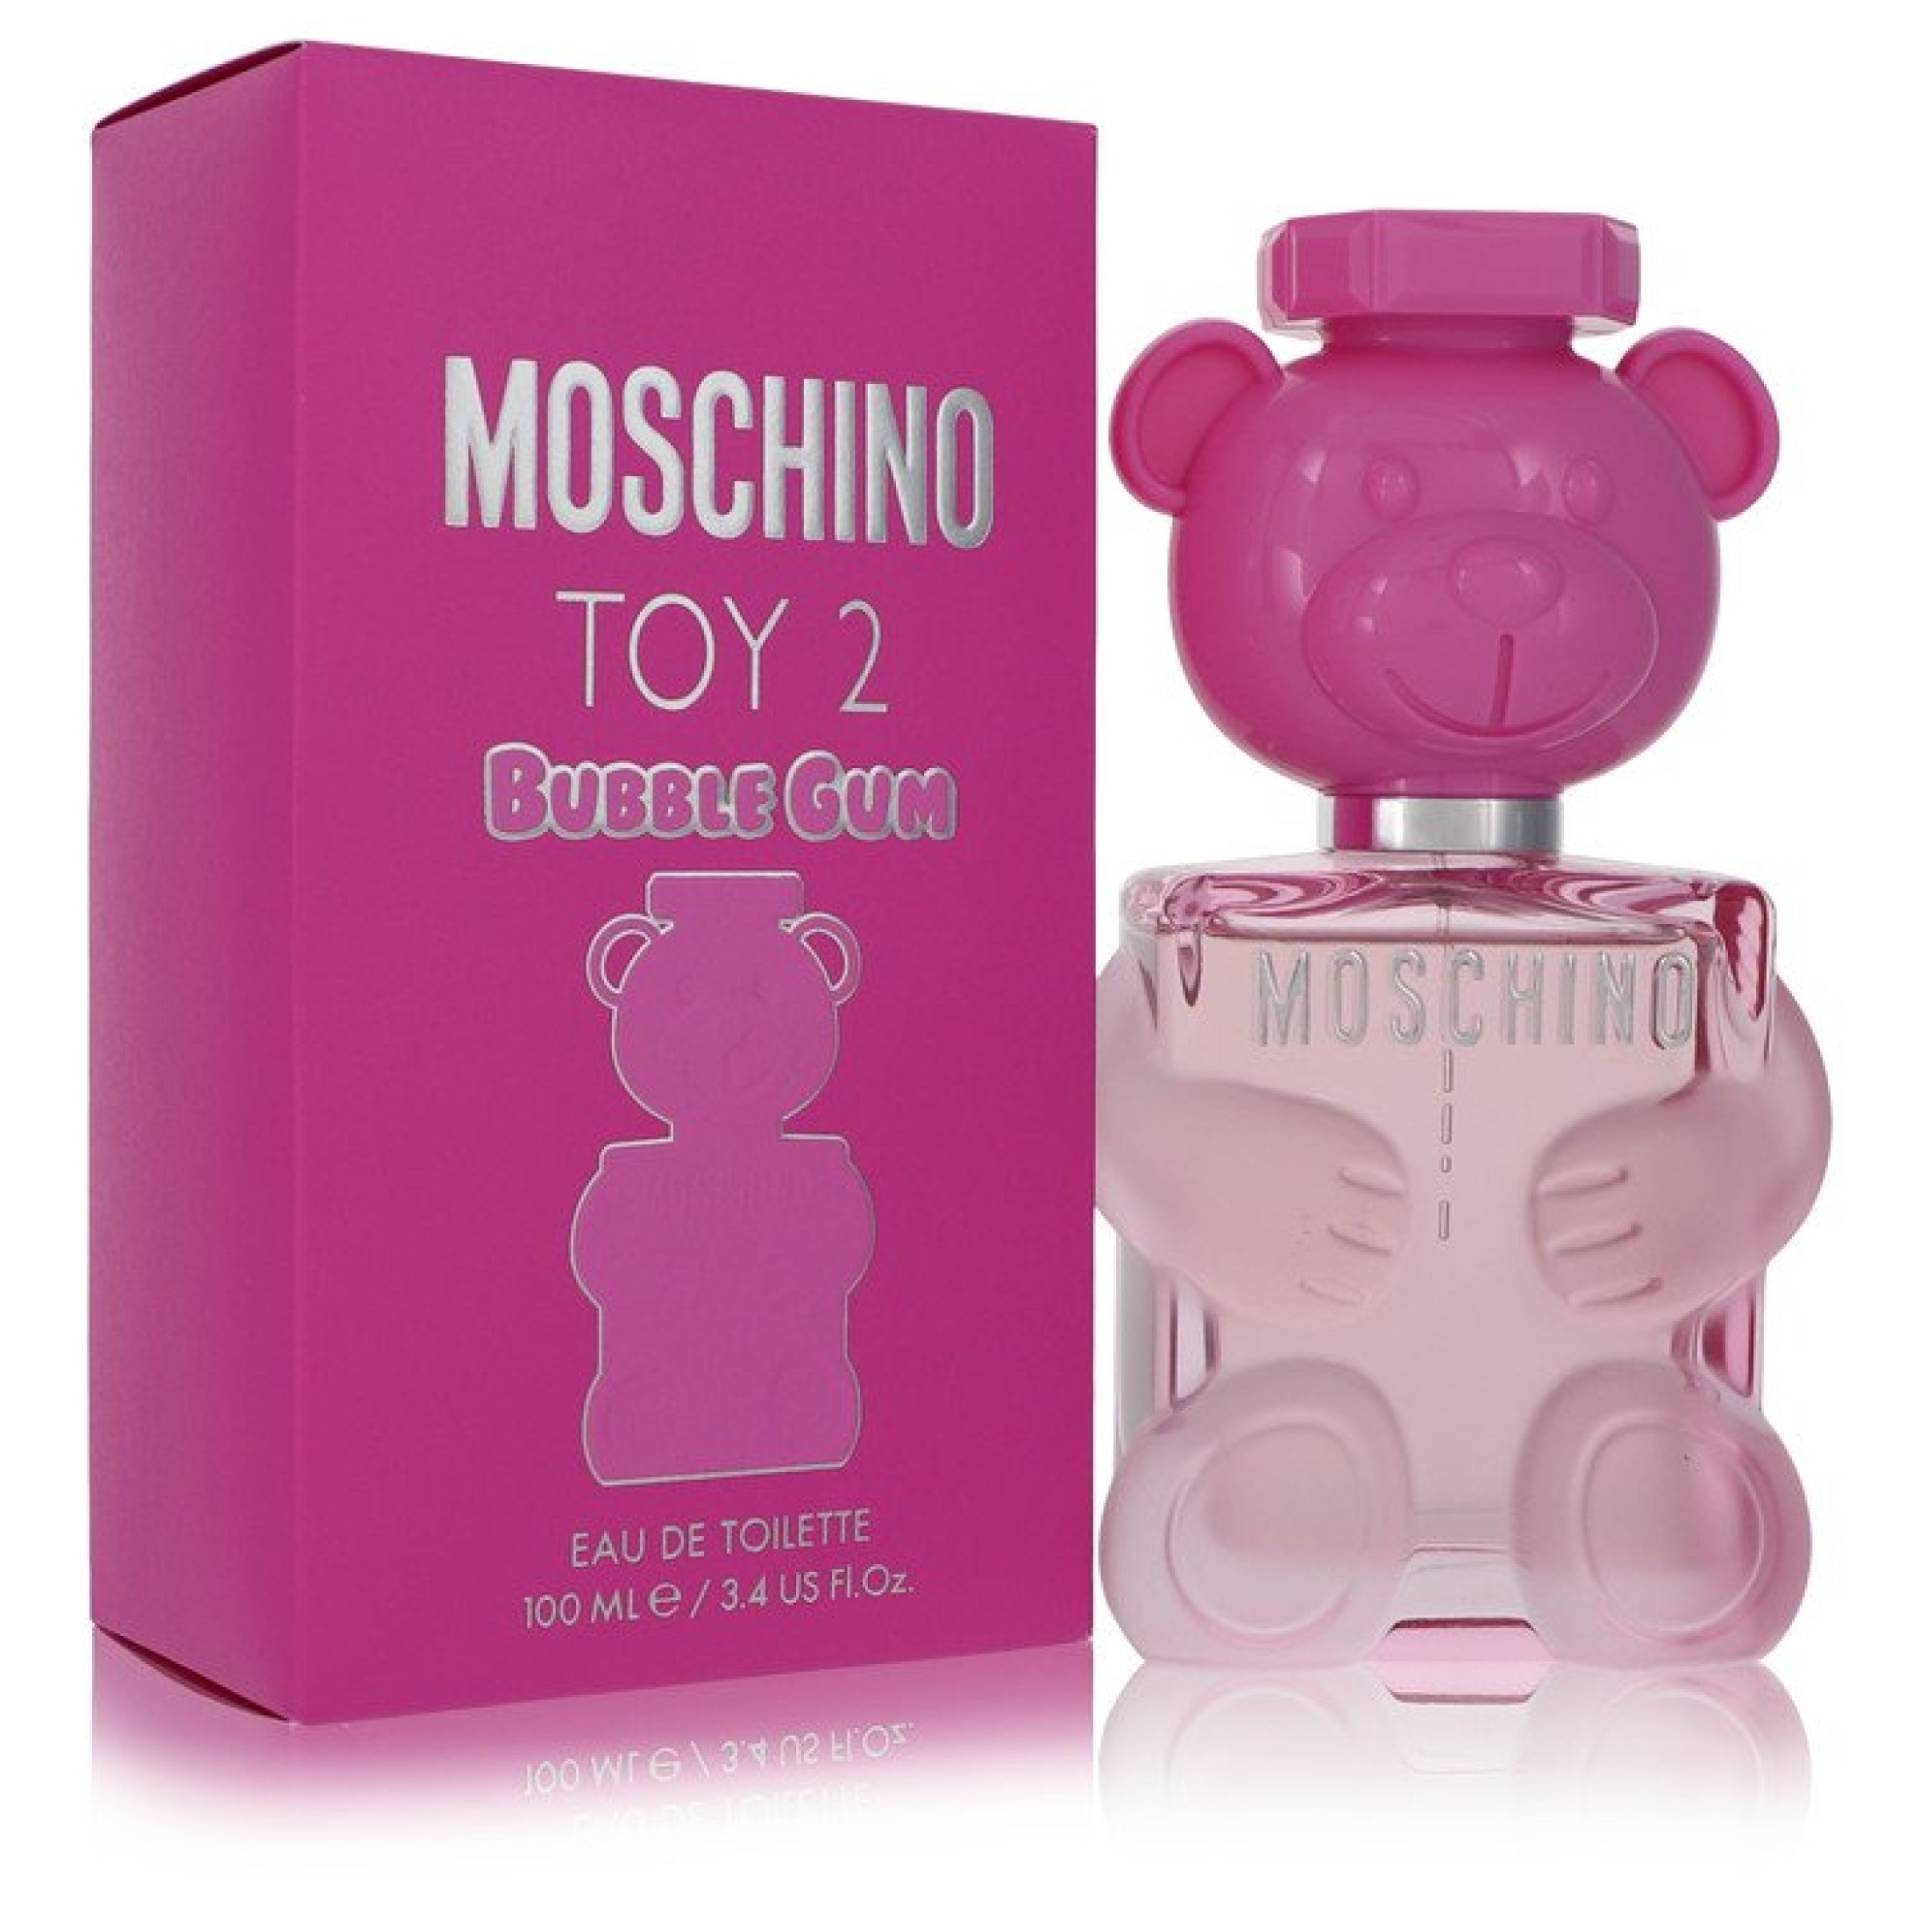 Moschino Toy 2 Bubble Gum Eau De Toilette Spray 100 ml von Moschino